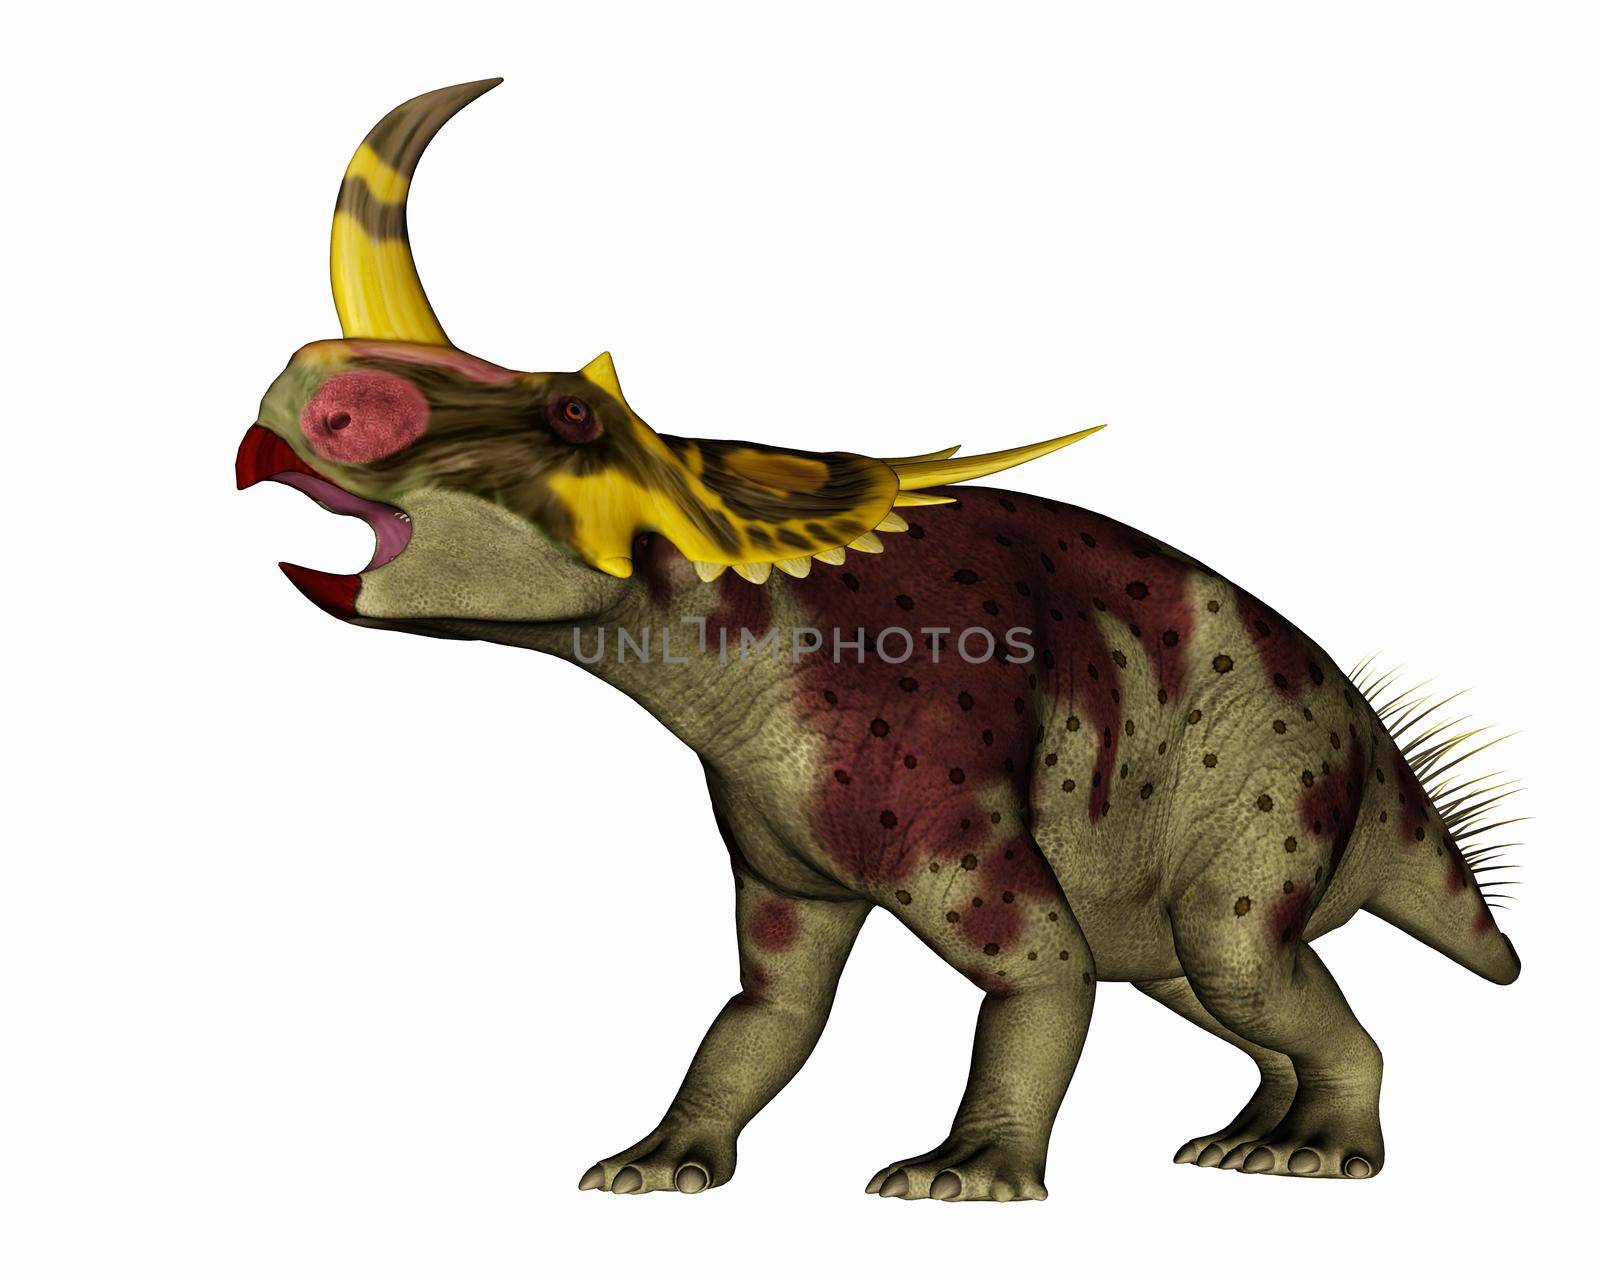 Rubeosaurus dinosaur standing and roaring - 3D render by Elenaphotos21